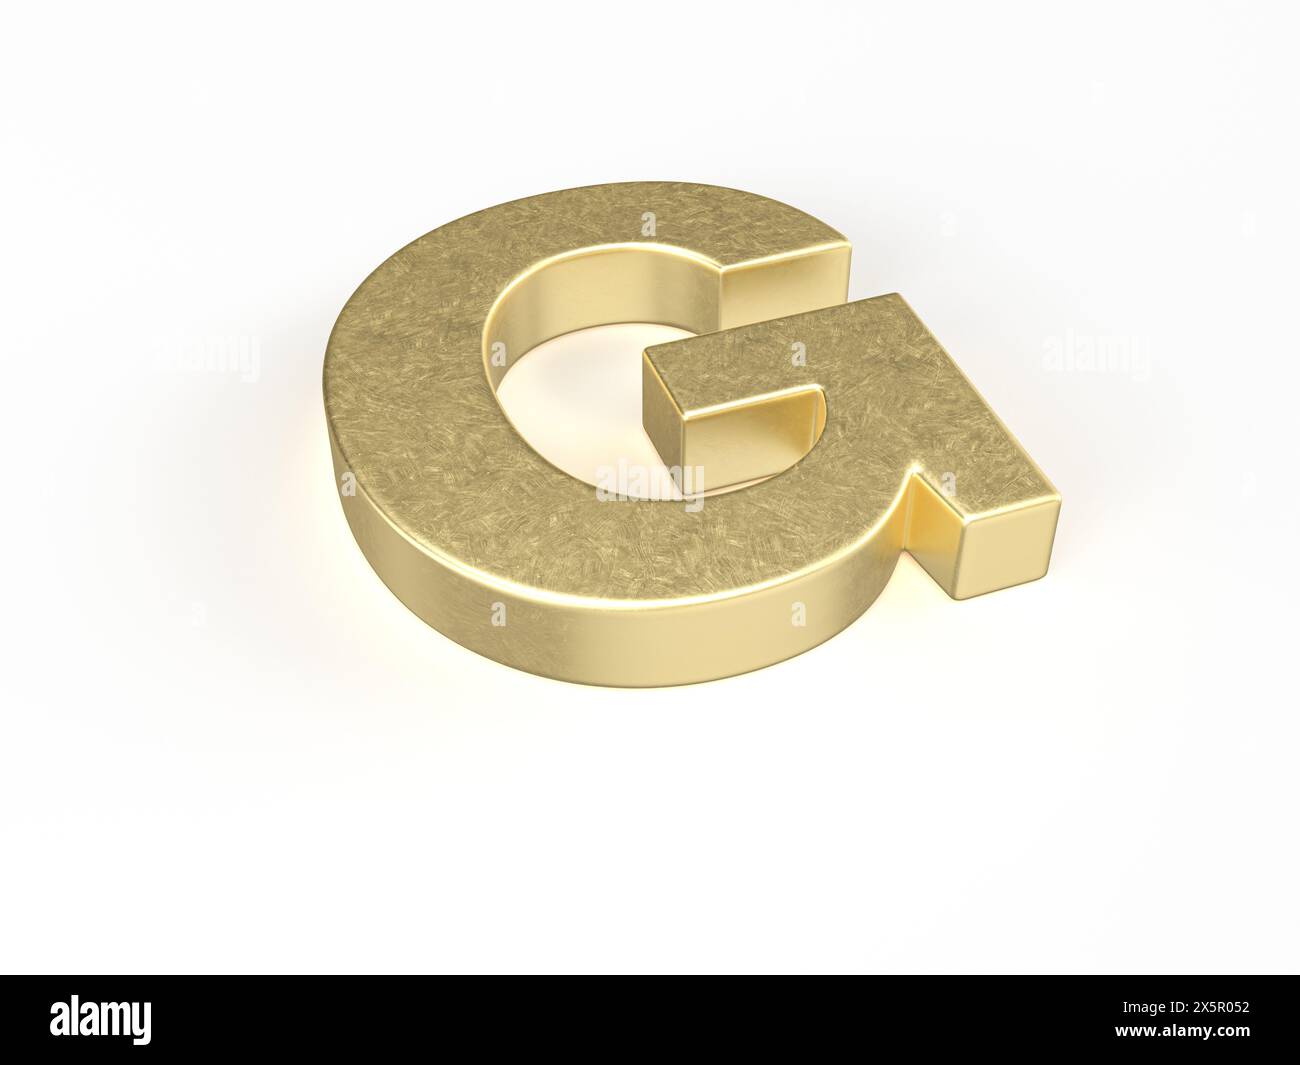 Gold letter G on a white background. 3d illustration. Stock Photo